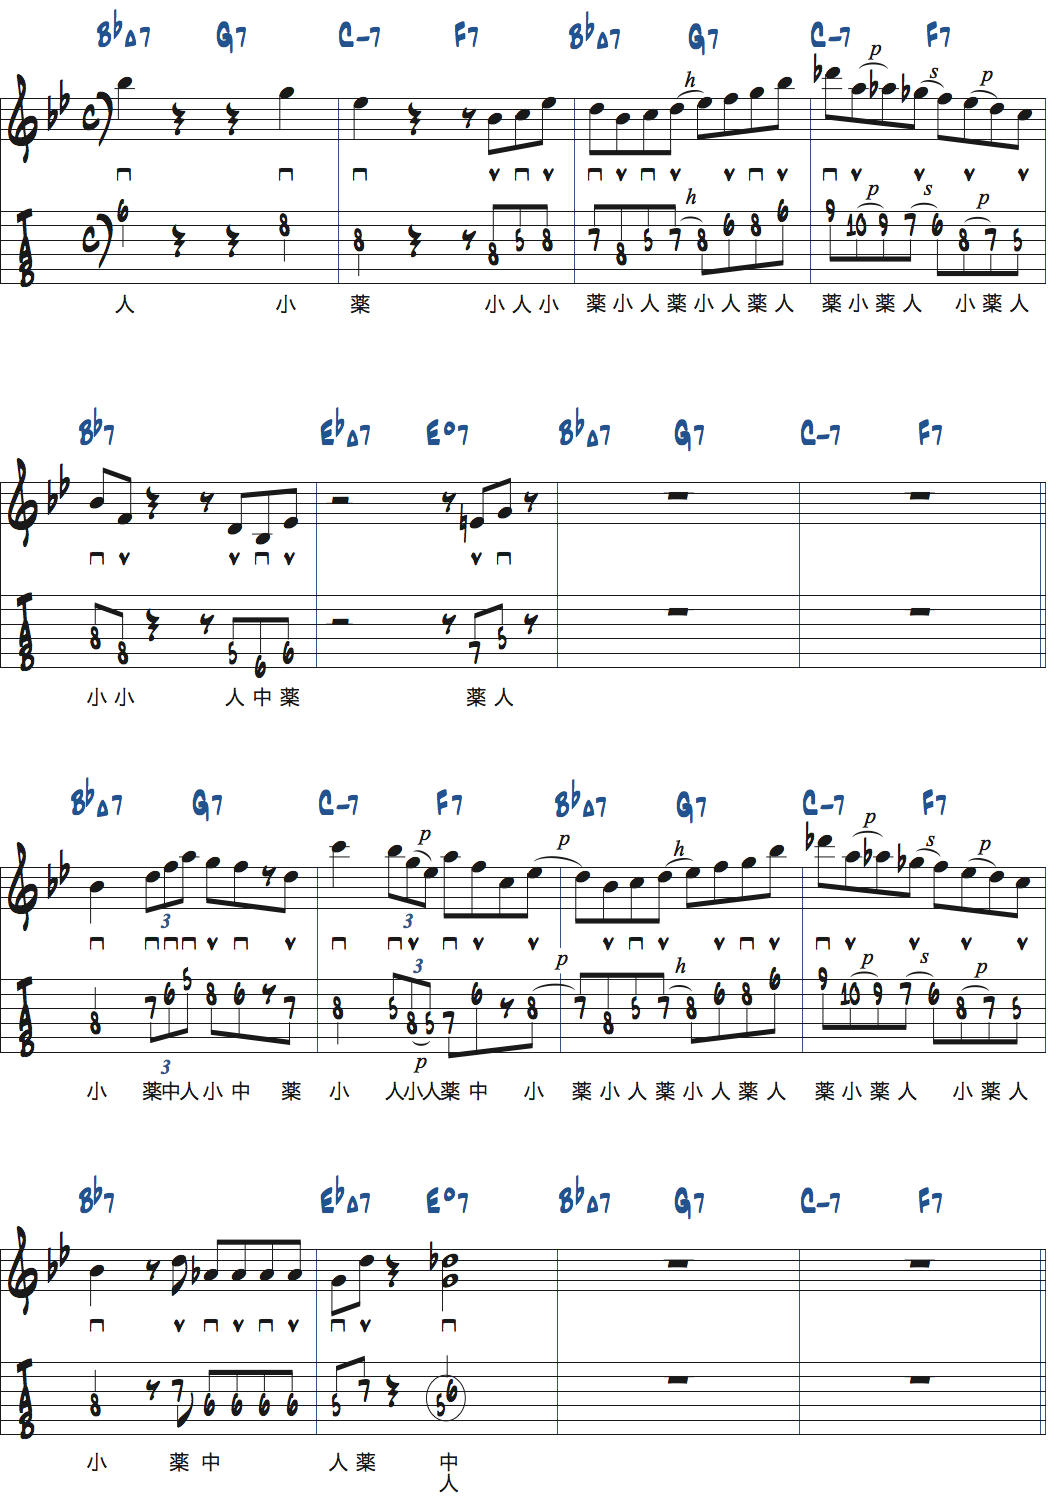 BbメジャーI-VI-II-Vポジション4リック5の前後のコードトーンのリズムを変えて弾く練習楽譜